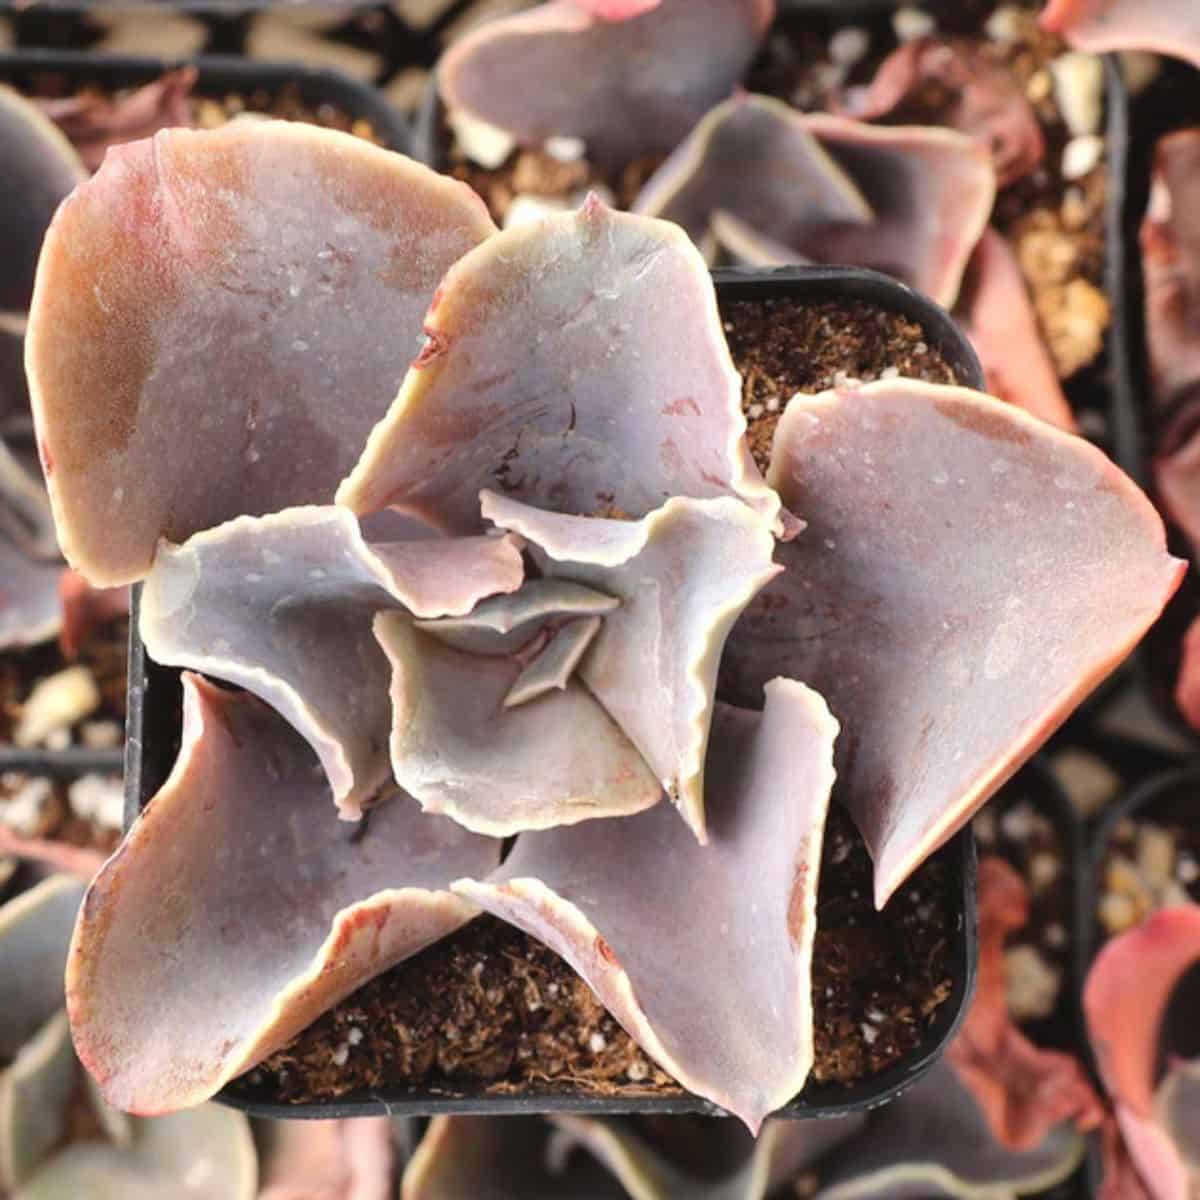 Echeveria ‘Violacina’ growing in a pot.